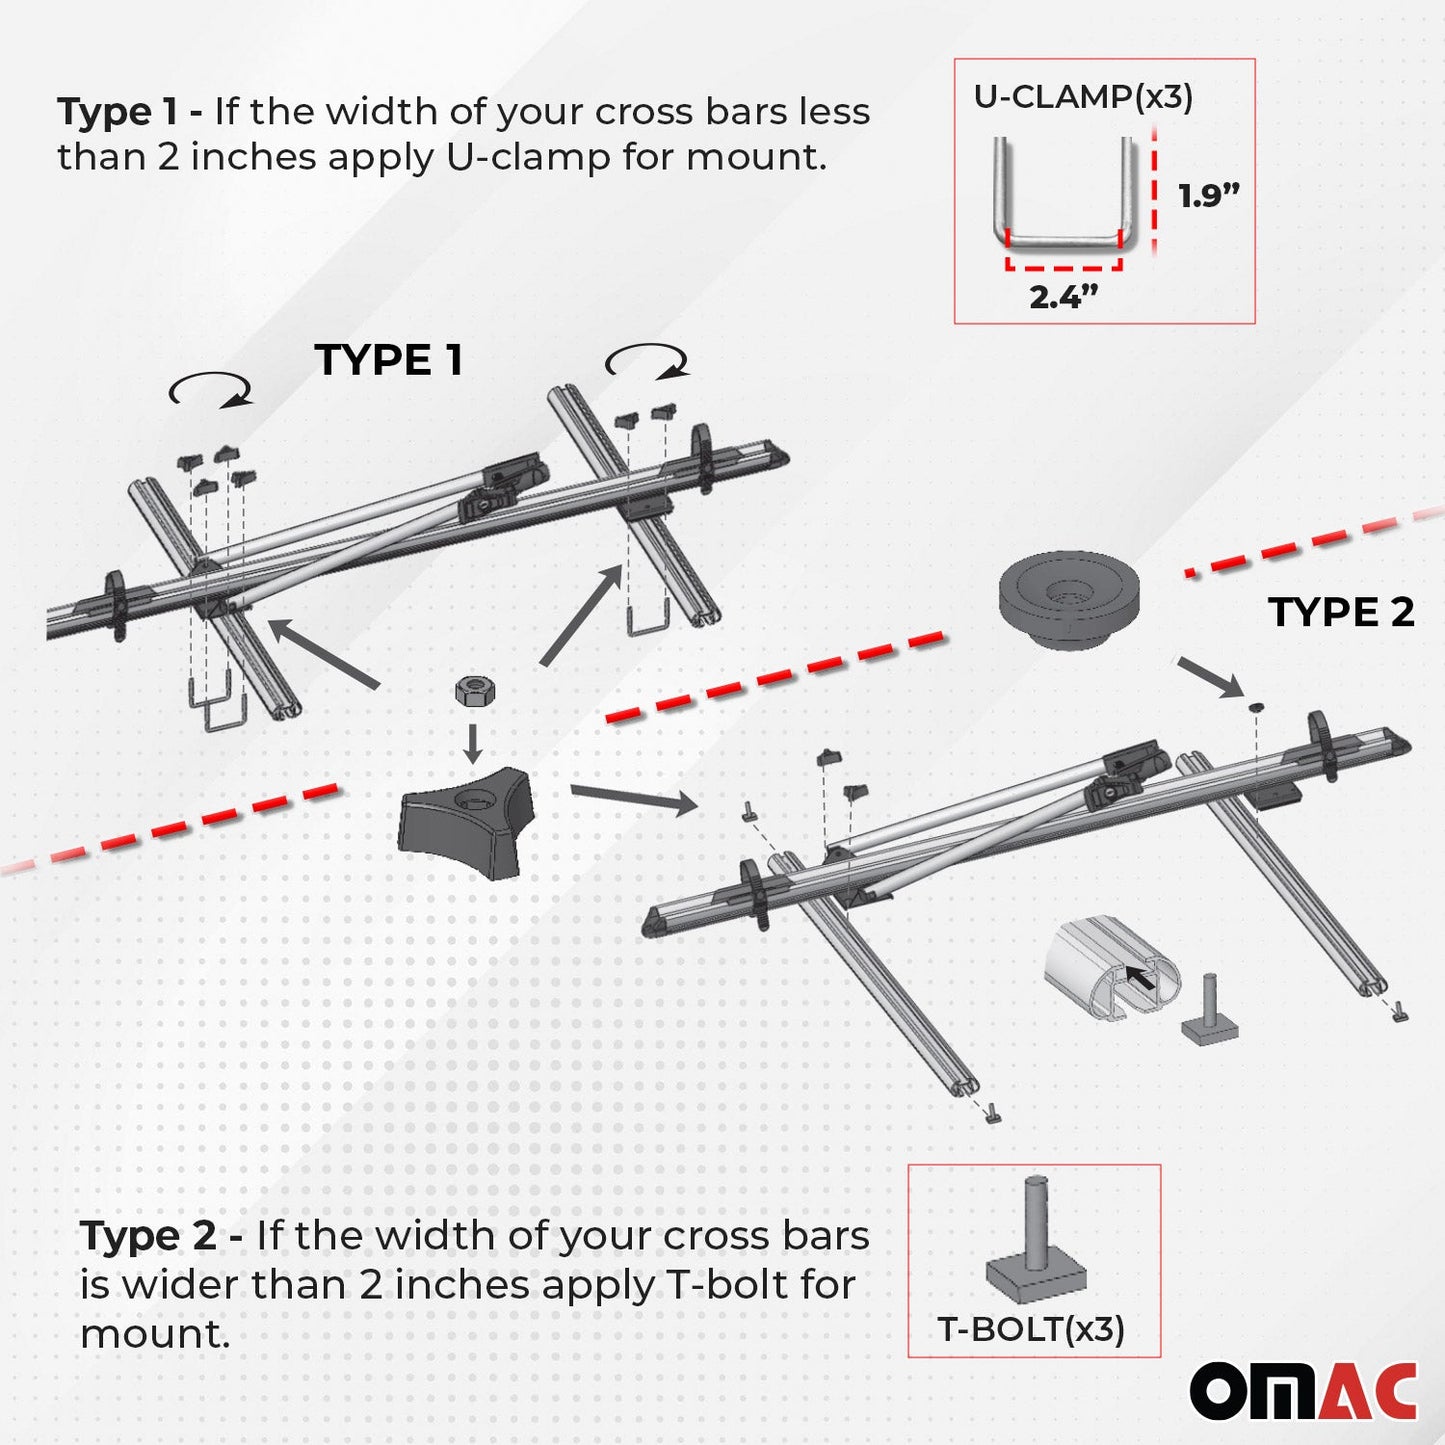 OMAC Bike Rack Carrier Roof Racks Set fits Nissan NP300 Navara 2016-2020 Gray 3x U020705